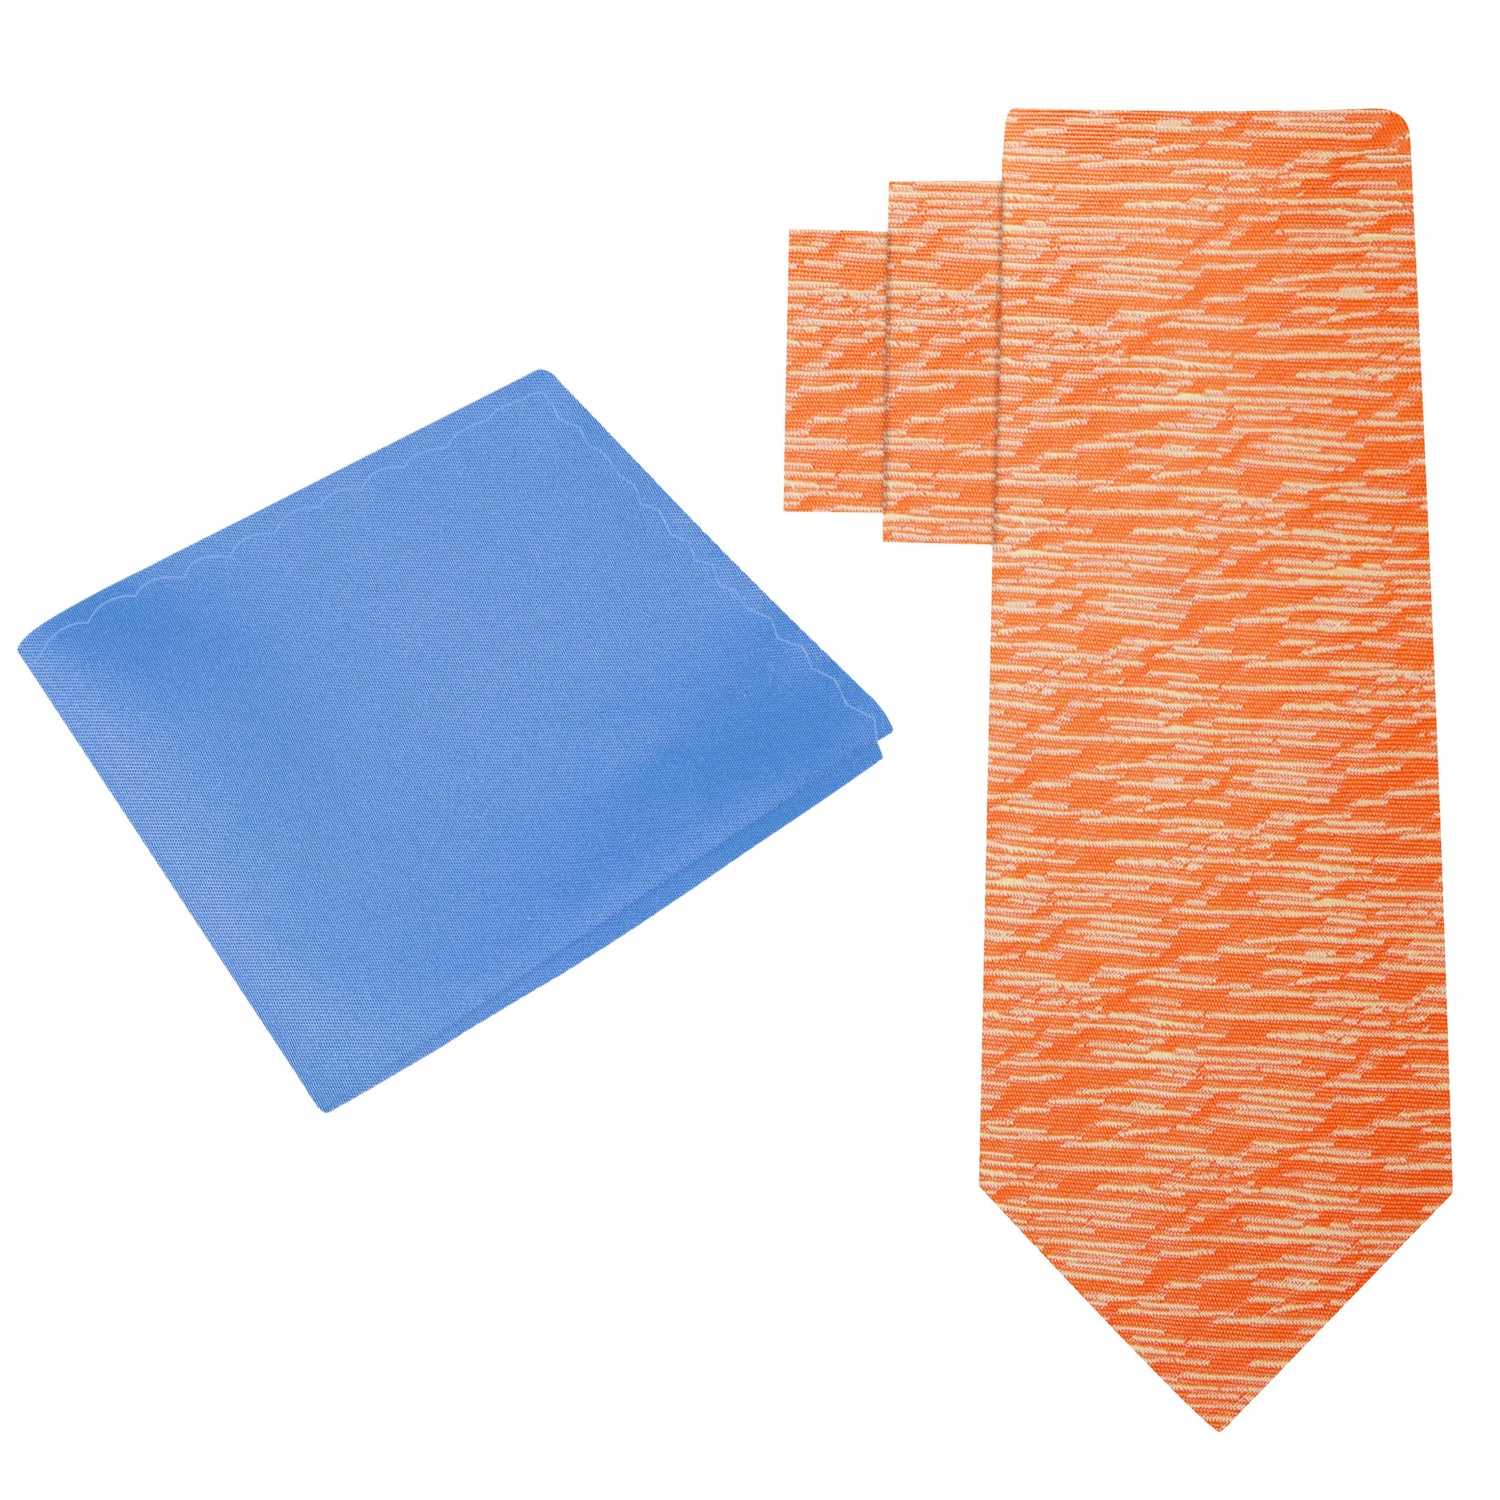 View 2: Orange Necktie with Light Blue Square